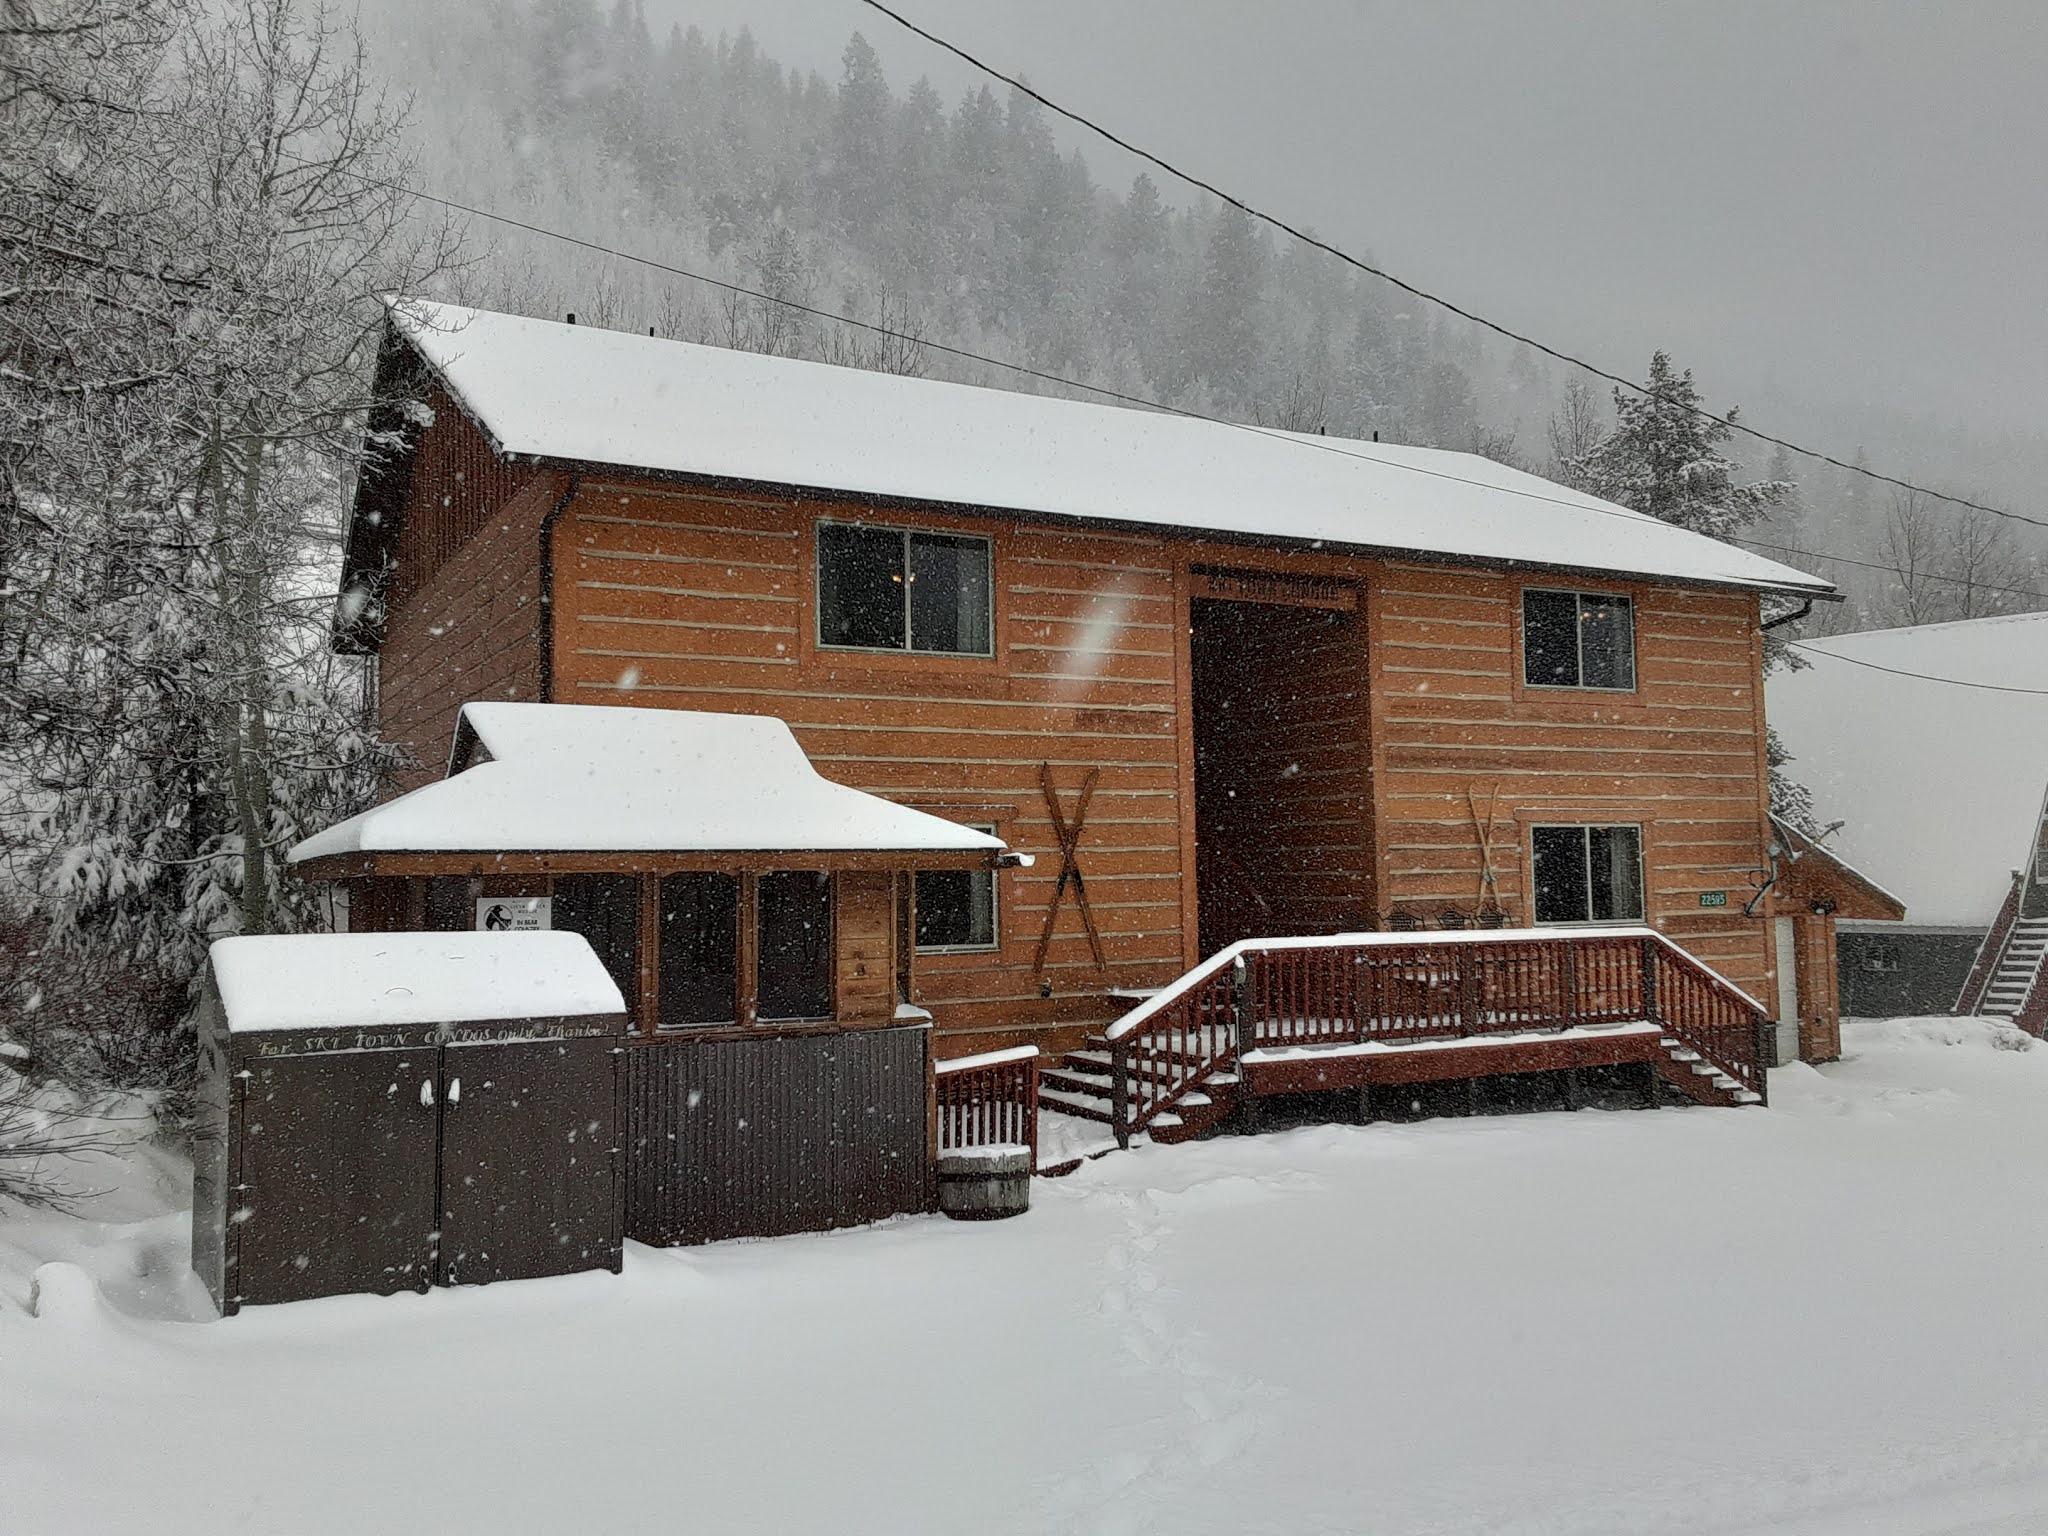 Exterior winter snowy day at Ski Town Condos.